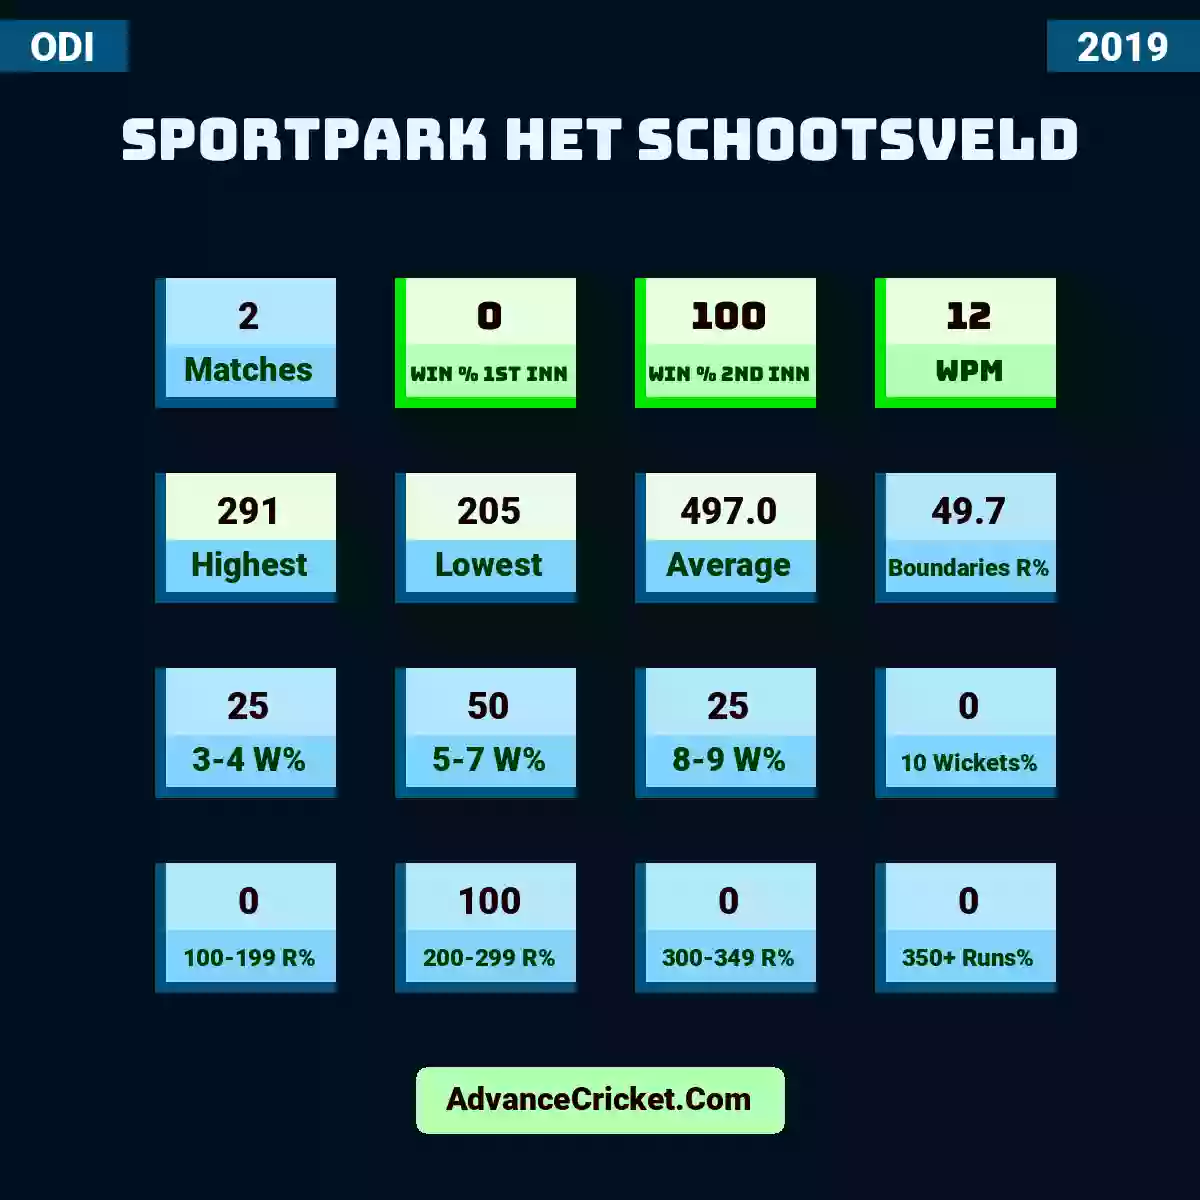 Image showing Sportpark Het Schootsveld with Matches: 2, Win % 1st Inn: 0, Win % 2nd Inn: 100, WPM: 12, Highest: 291, Lowest: 205, Average: 497.0, Boundaries R%: 49.7, 3-4 W%: 25, 5-7 W%: 50, 8-9 W%: 25, 10 Wickets%: 0, 100-199 R%: 0, 200-299 R%: 100, 300-349 R%: 0, 350+ Runs%: 0.